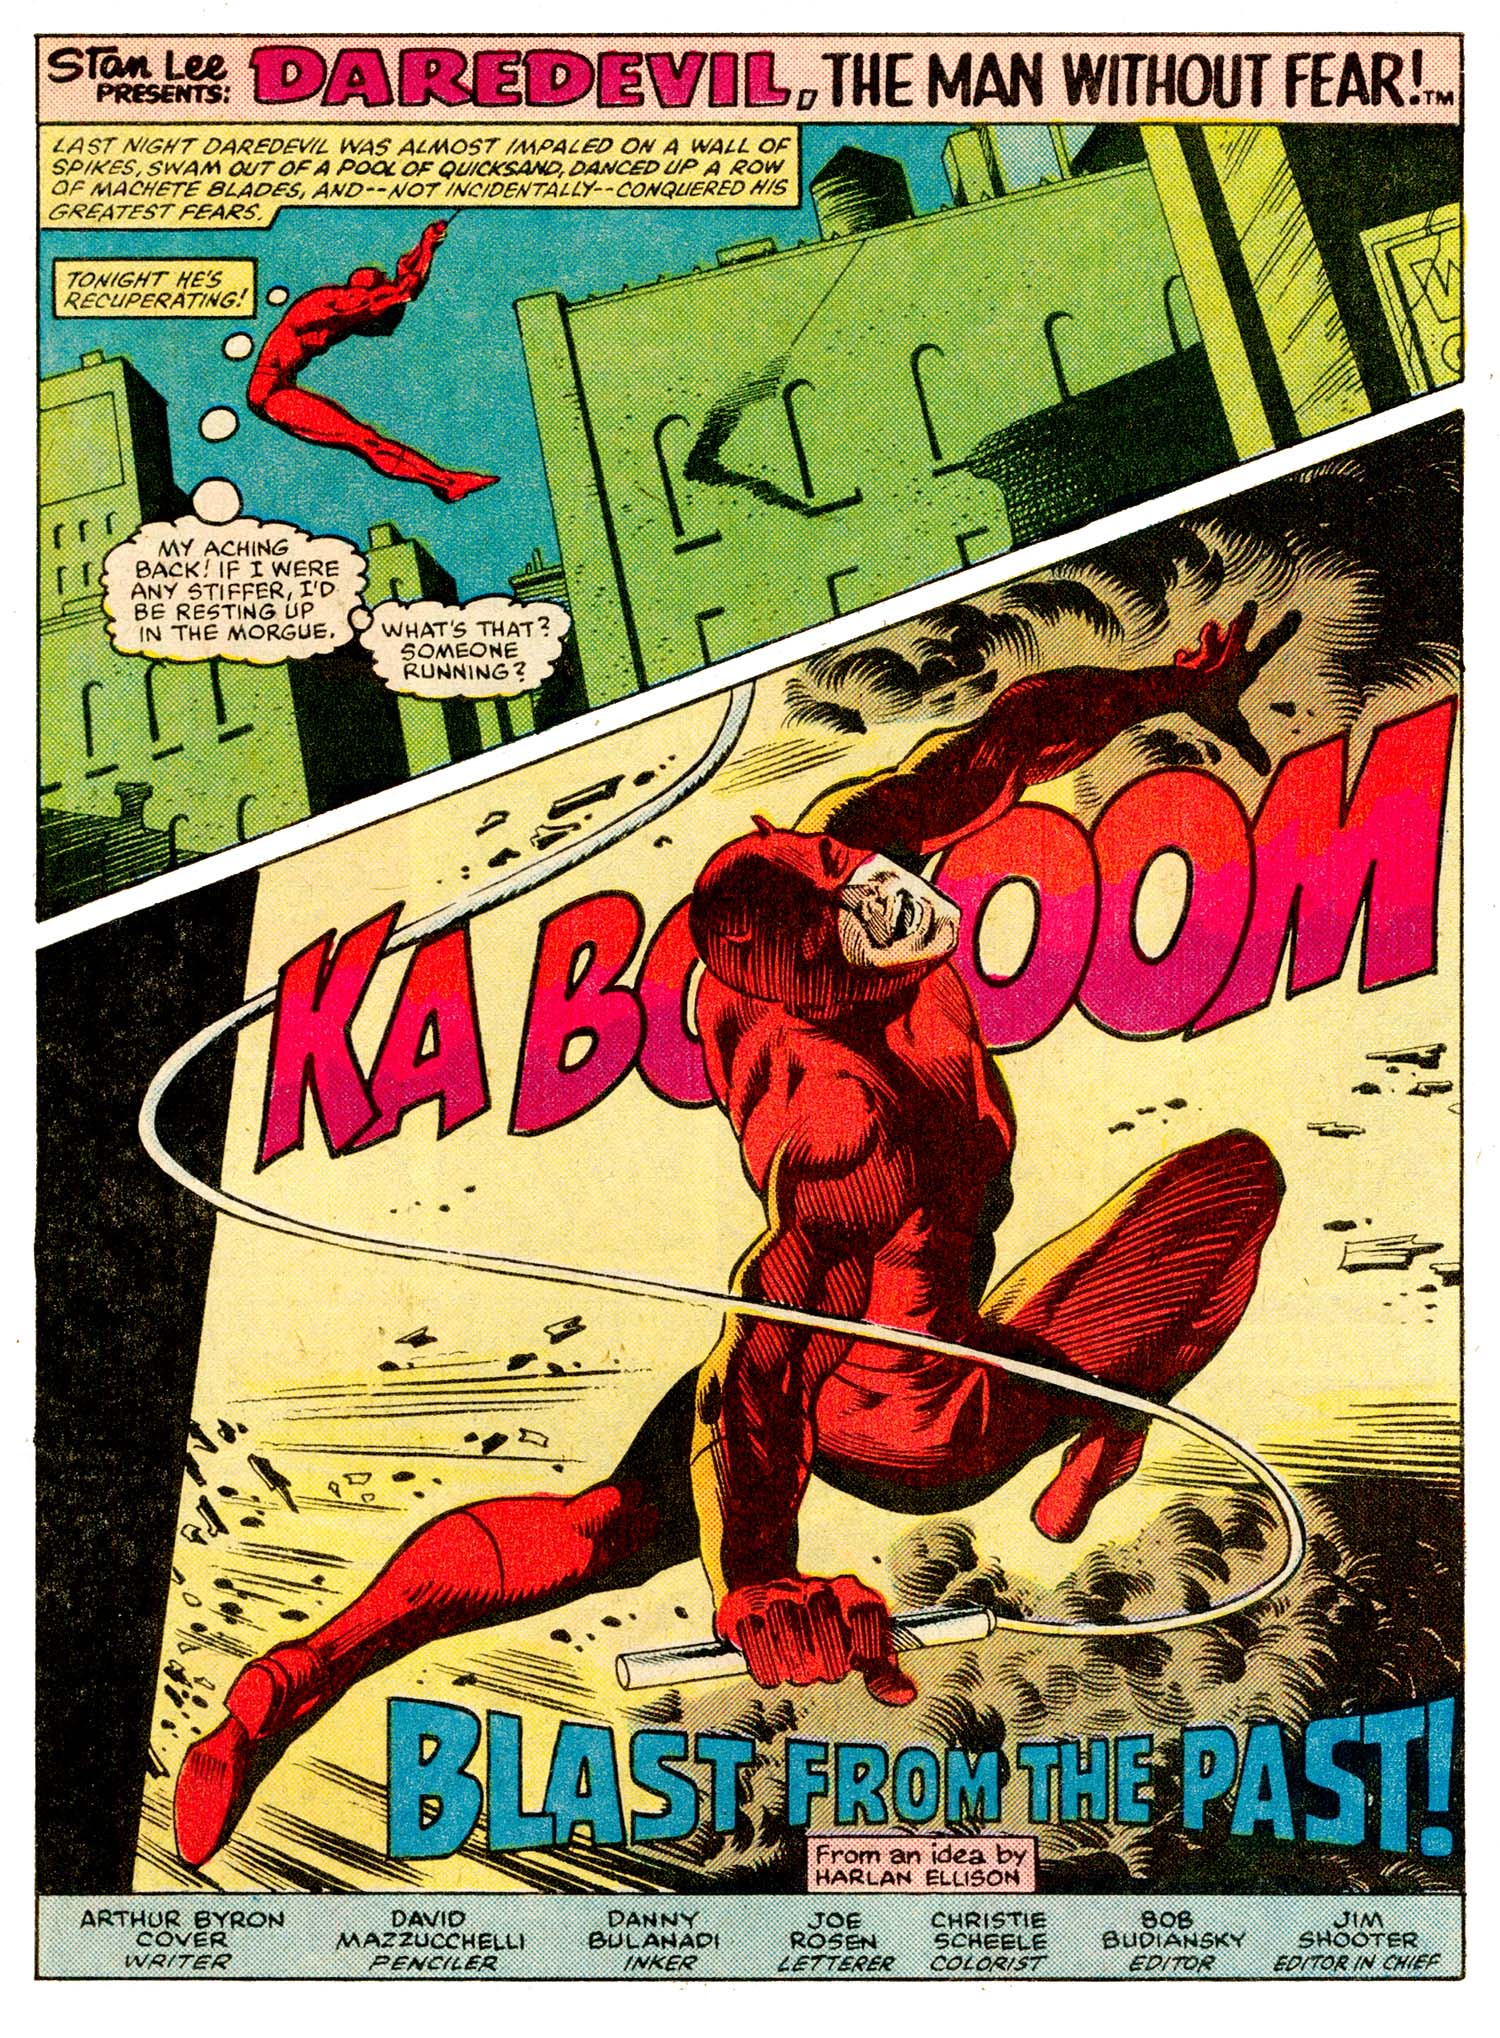 Daredevil #209, art by David Mazzuchelli and Danny Bulandi